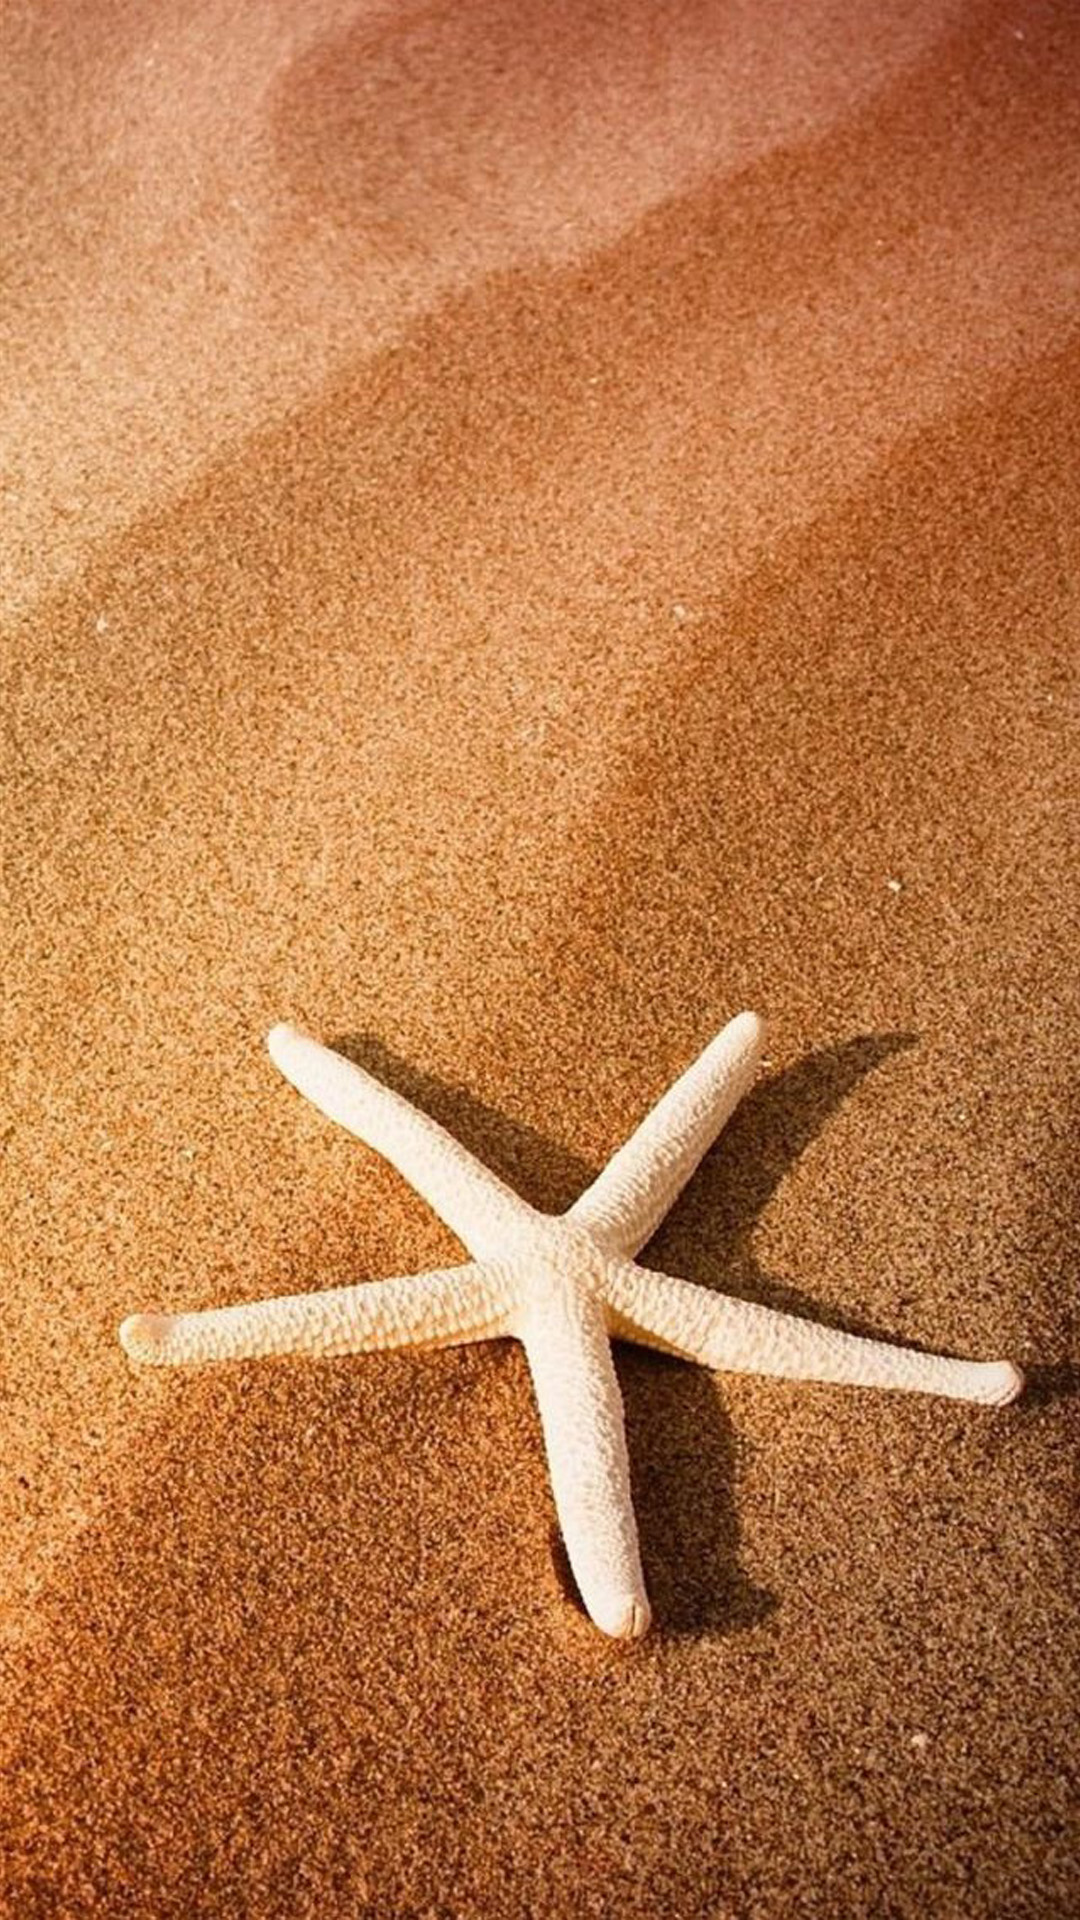 Beach Seastar Android wallpaper